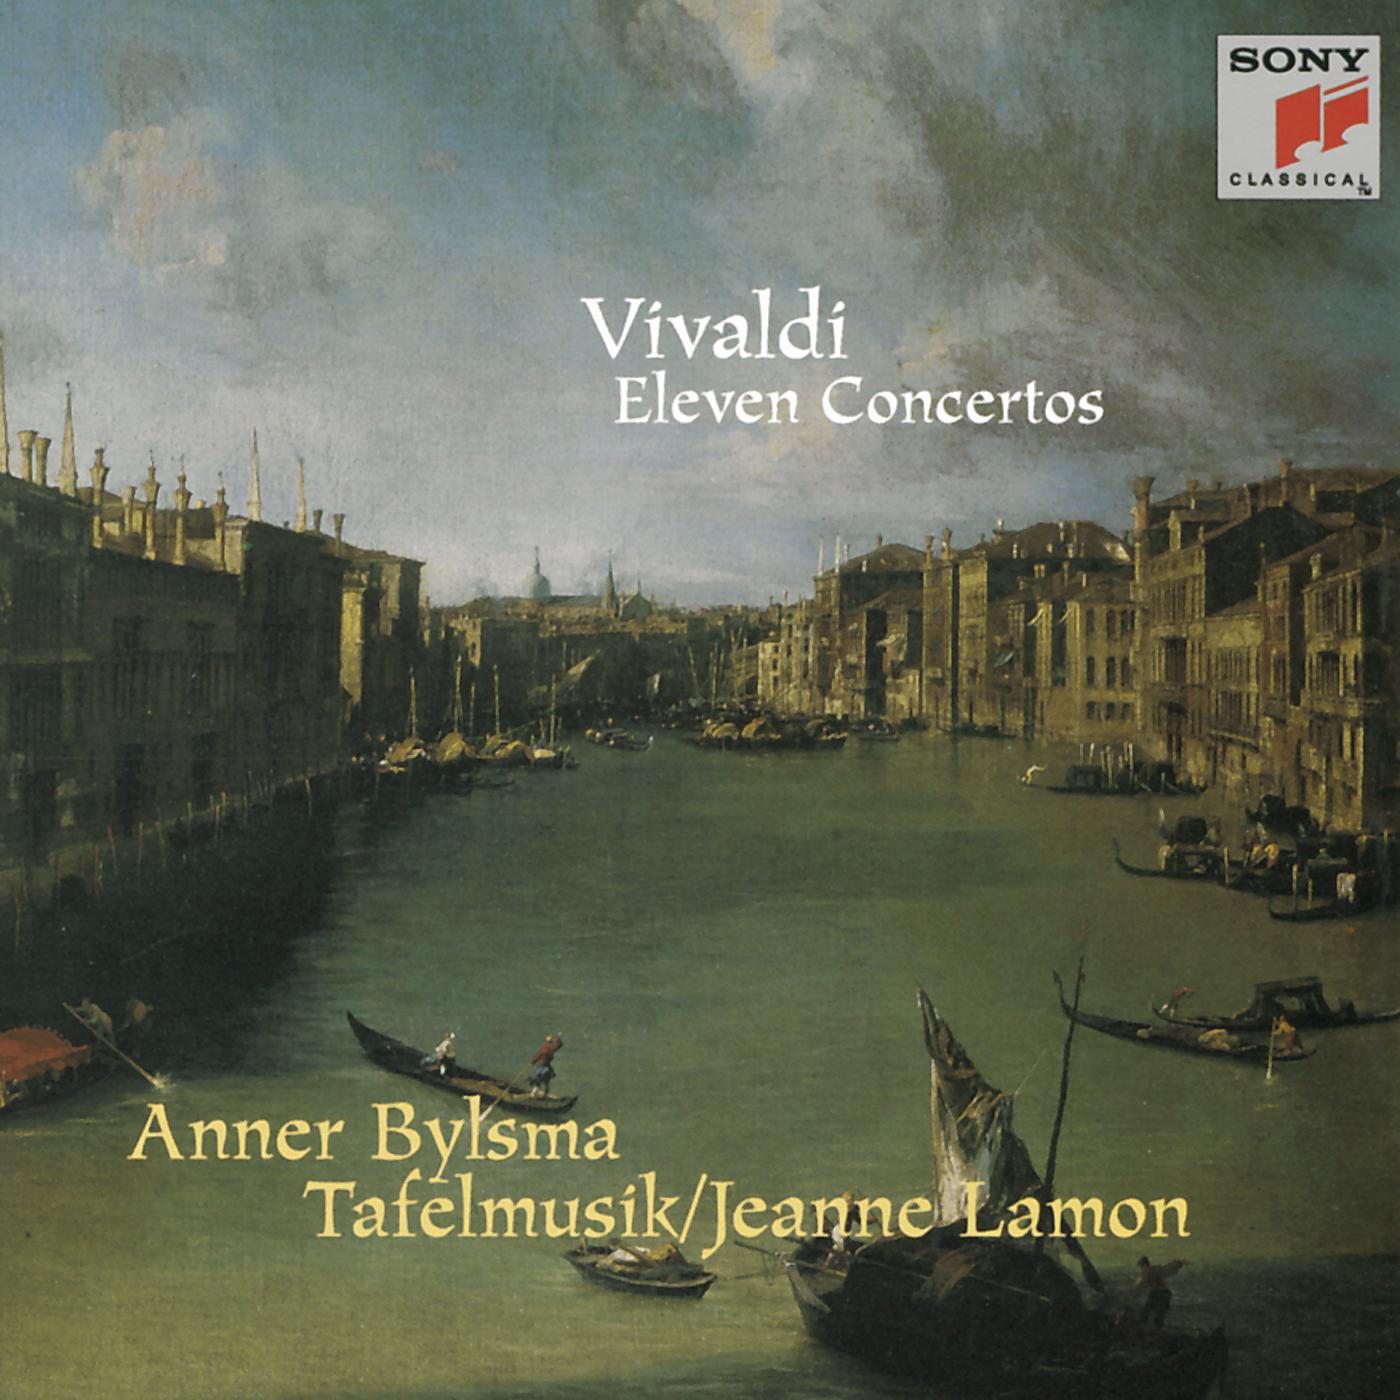 Concerto for Strings in G Major, RV 151 "Alla rustica"